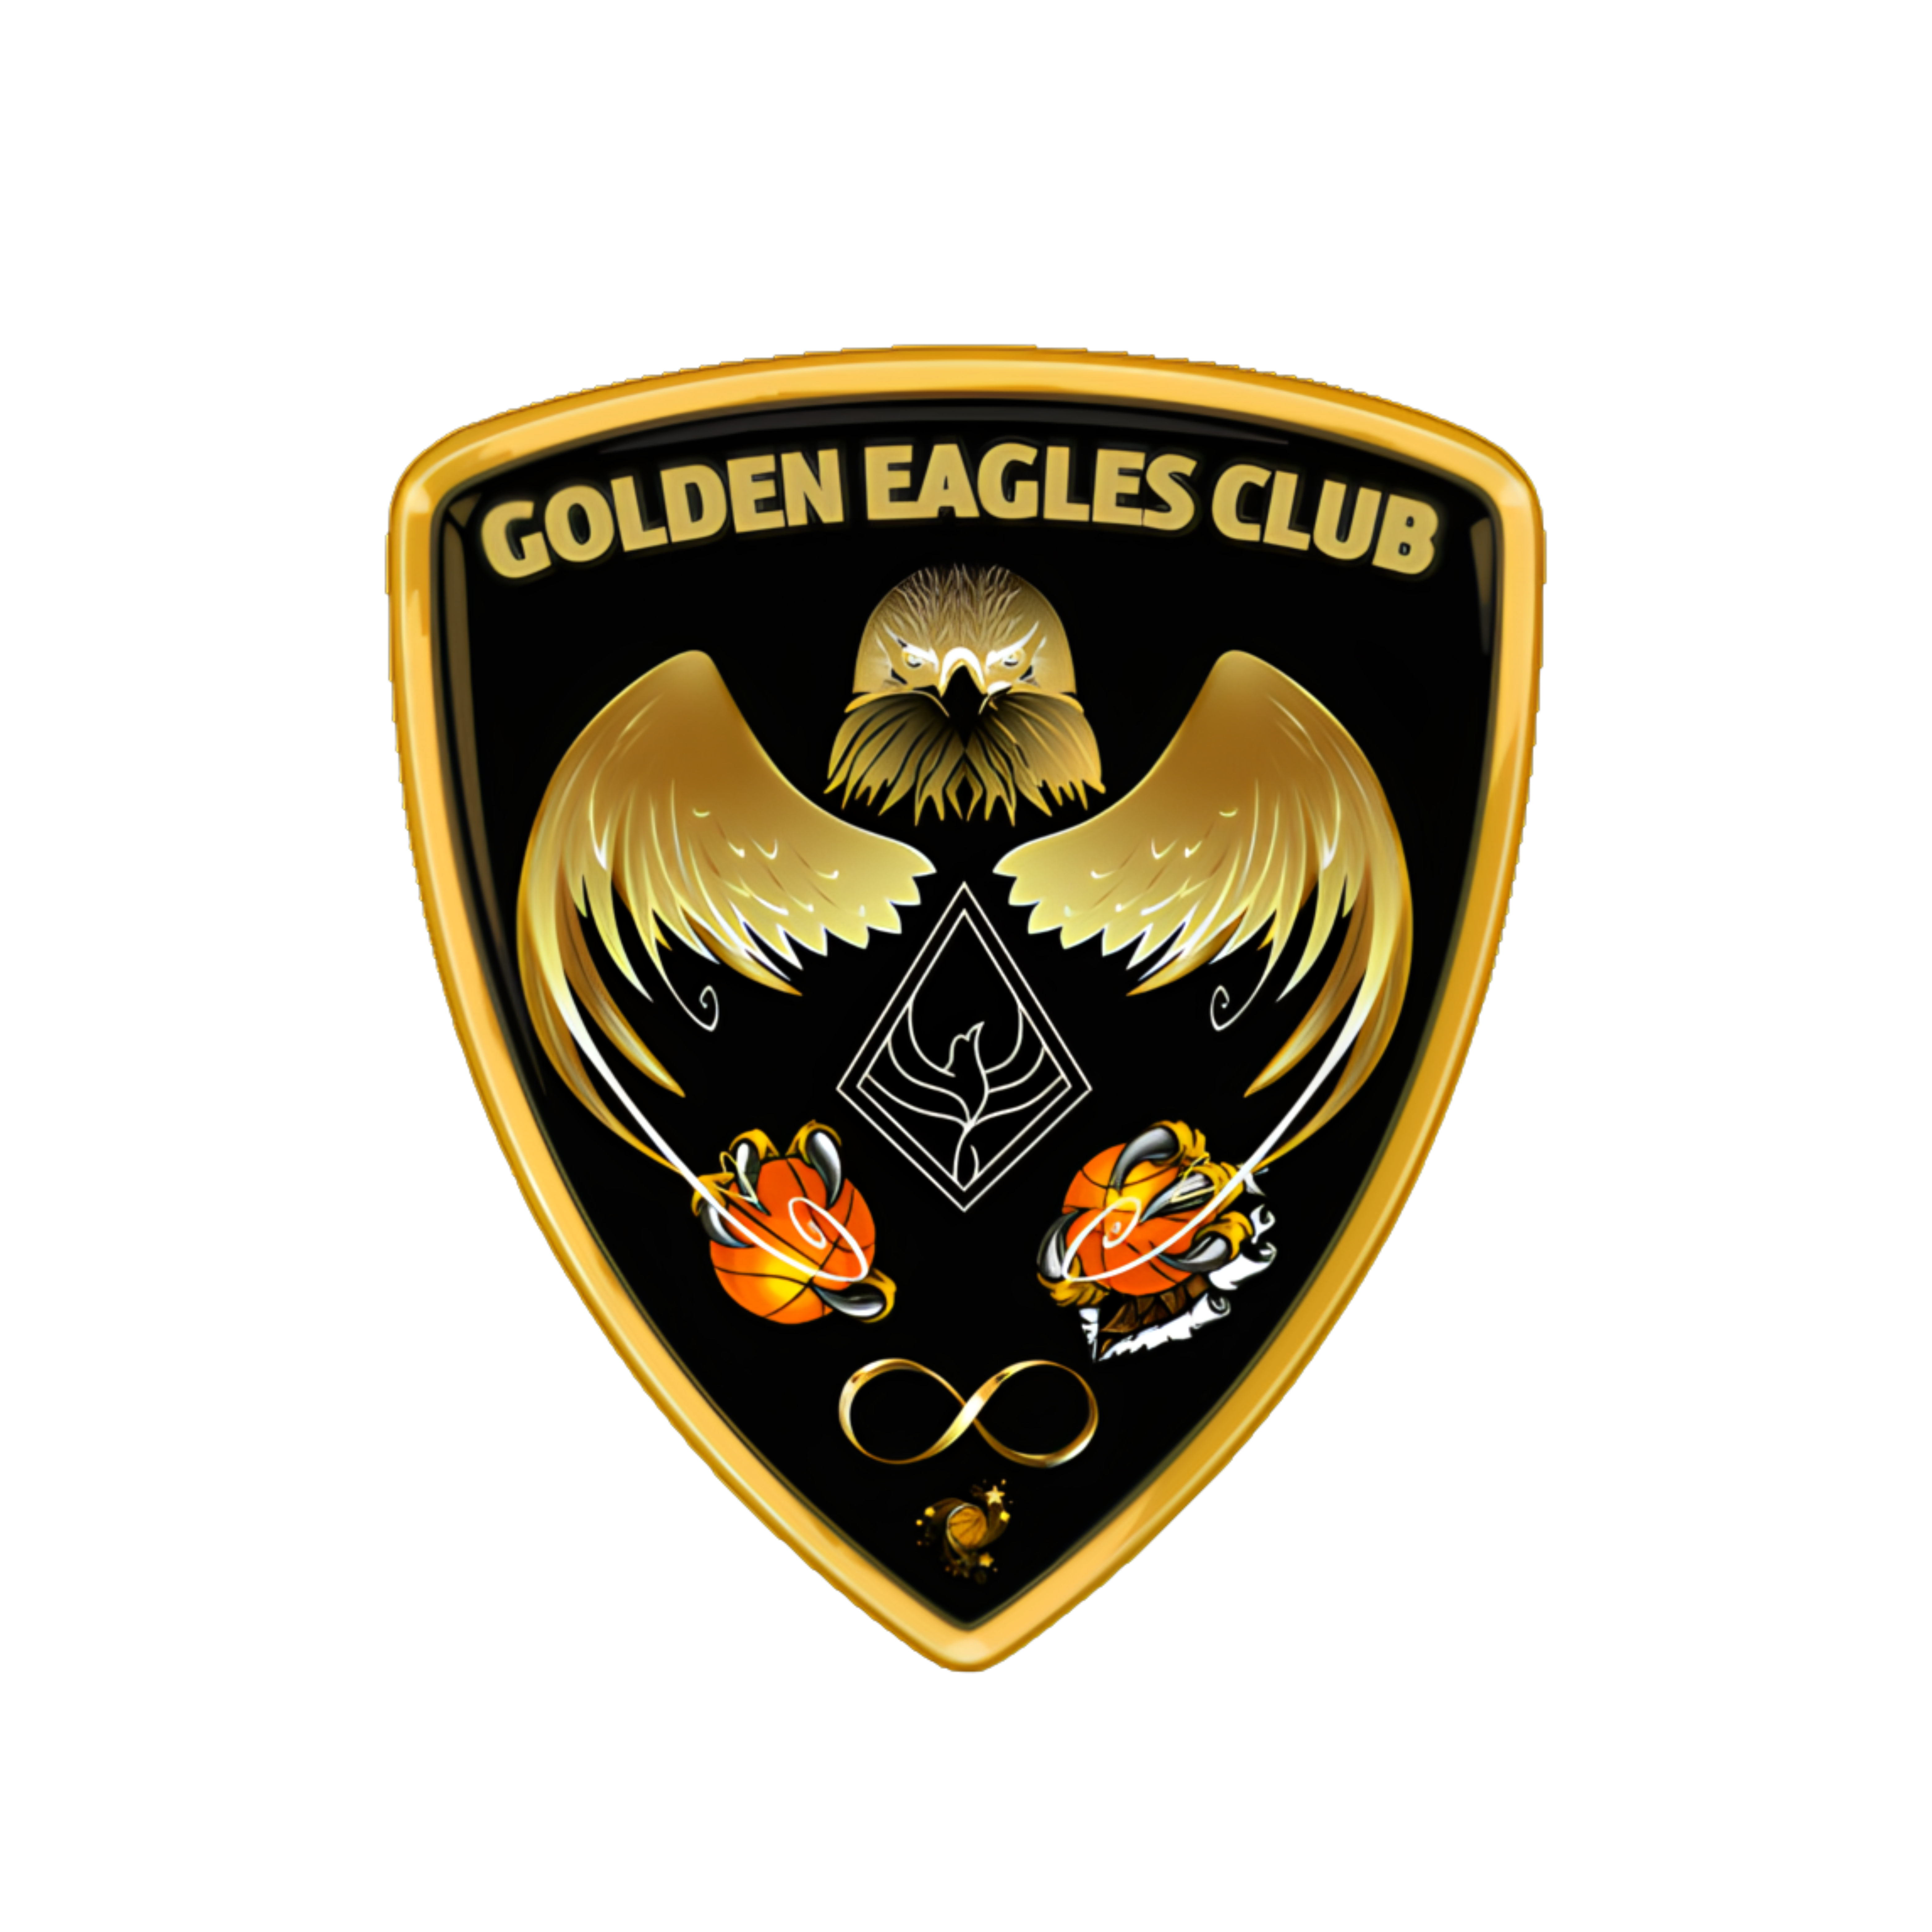 Golden Eagles Club logo